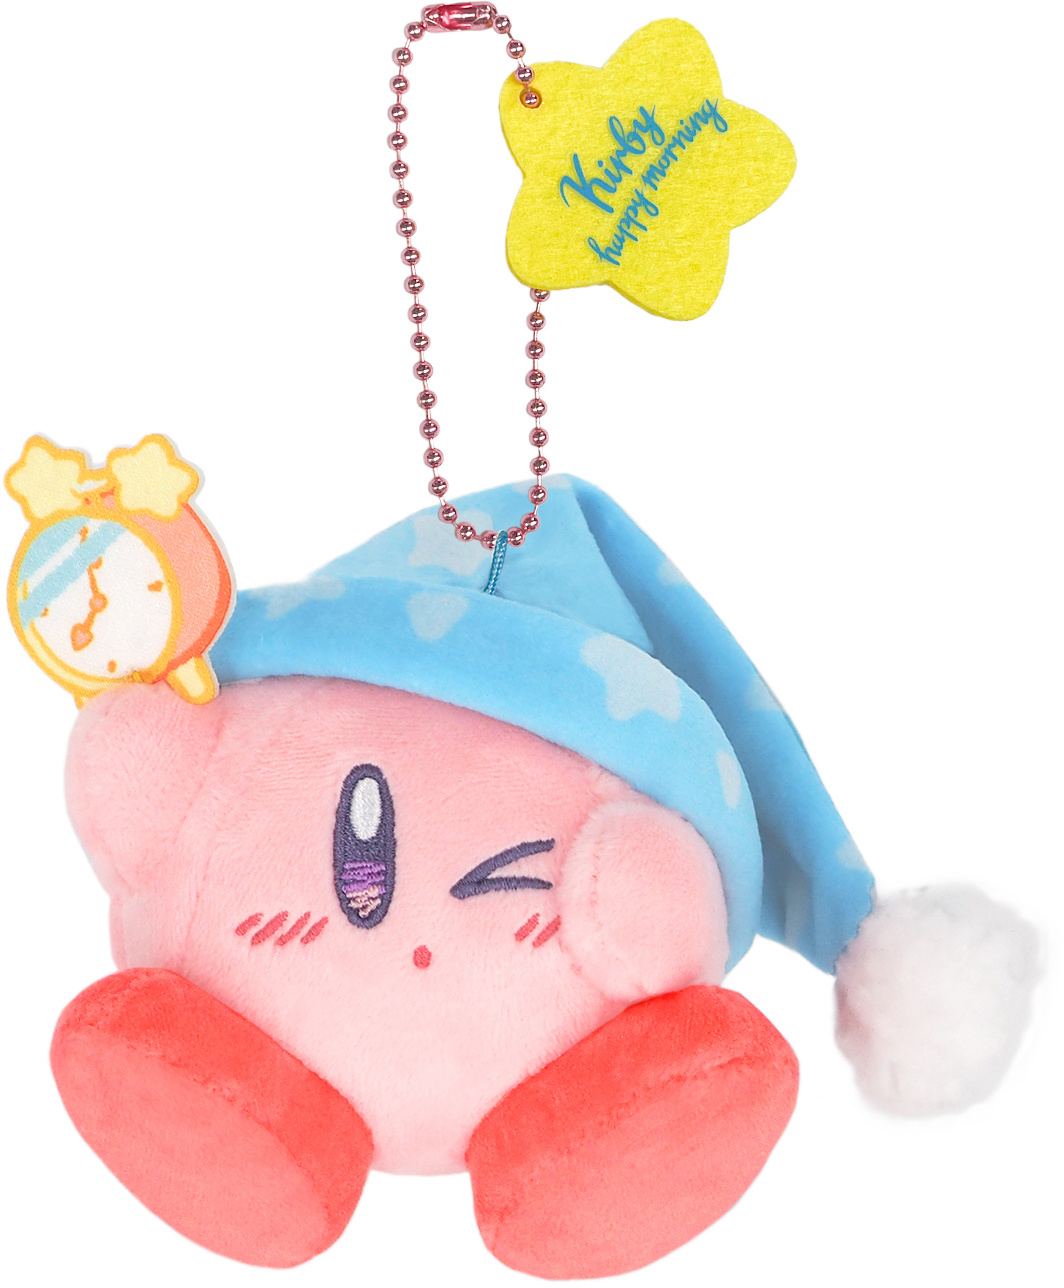 Kirby Happy Morning KHM-03: Morning Kirby Mascot San-ei Boeki